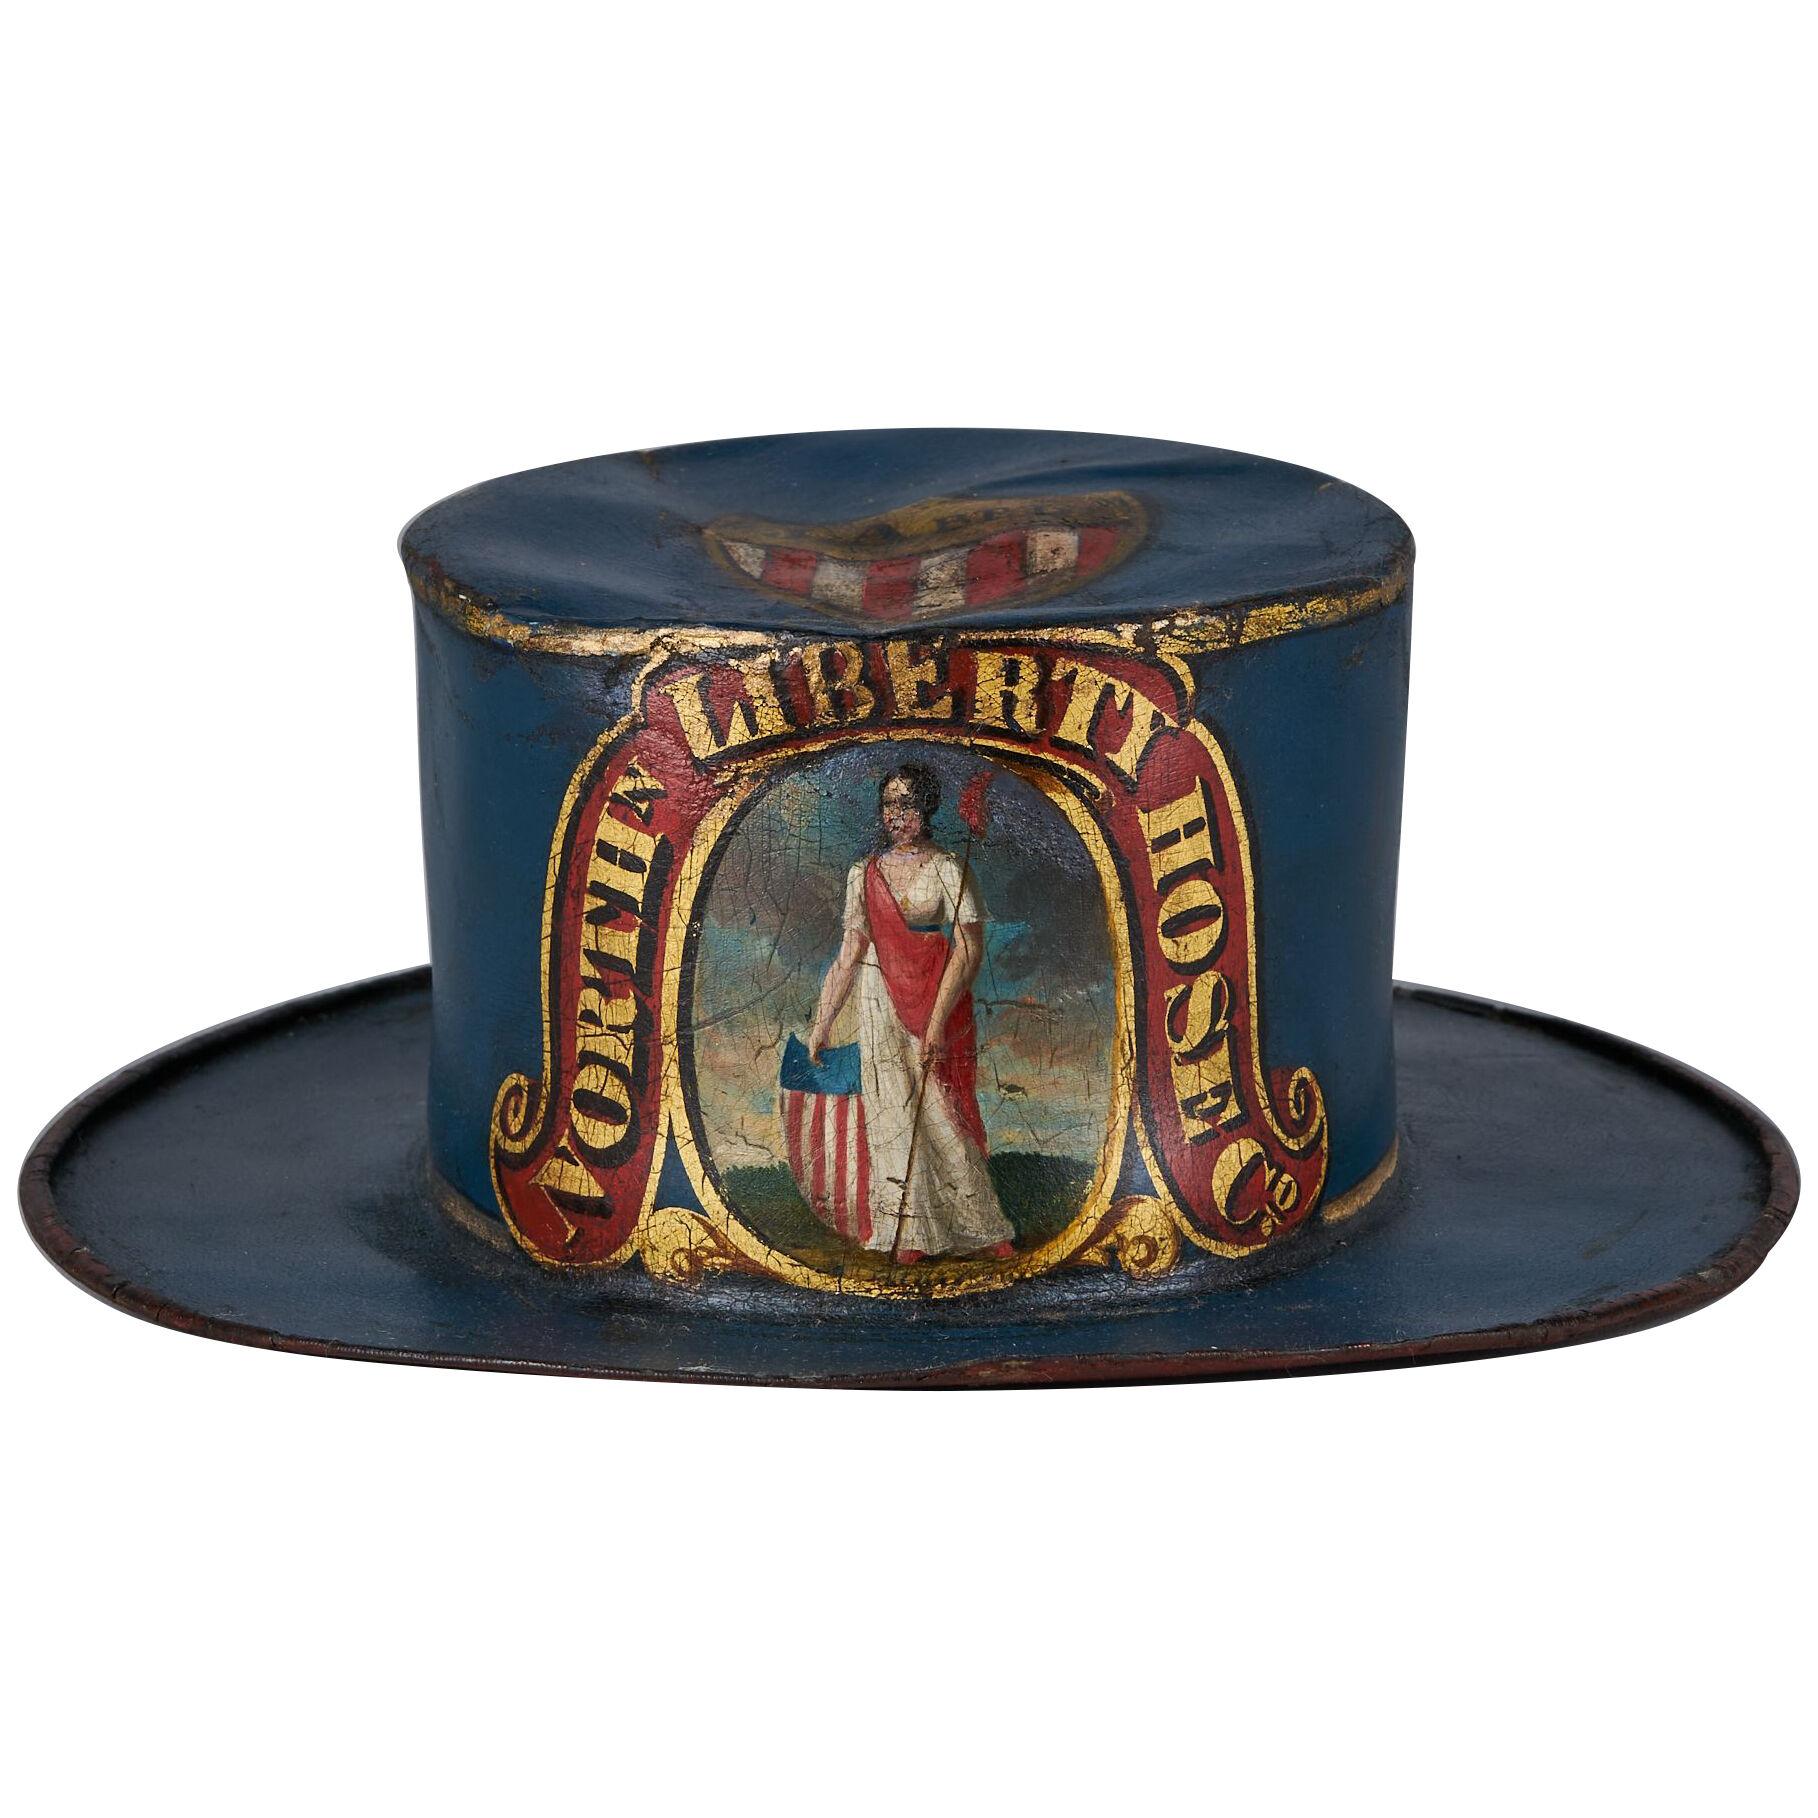 Northern Liberty Hose Company of Philadelphia Fireman’s Hat for John Abel